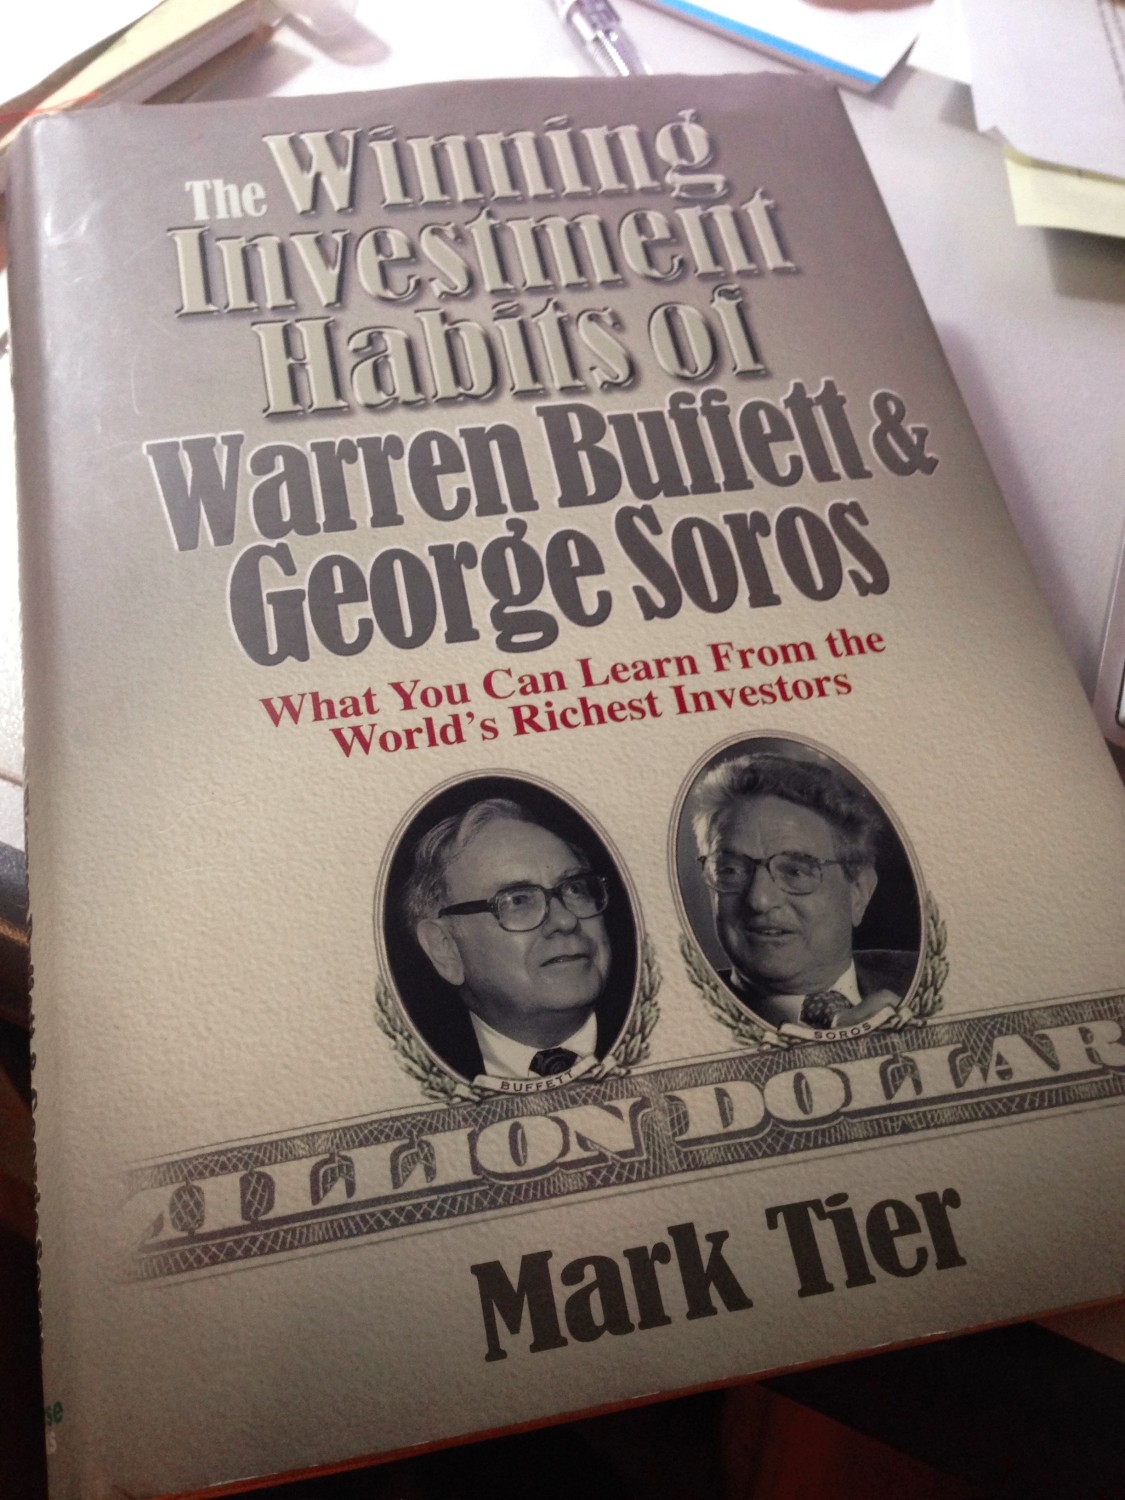 Winning investment habits of Warren Buffett & George Soros